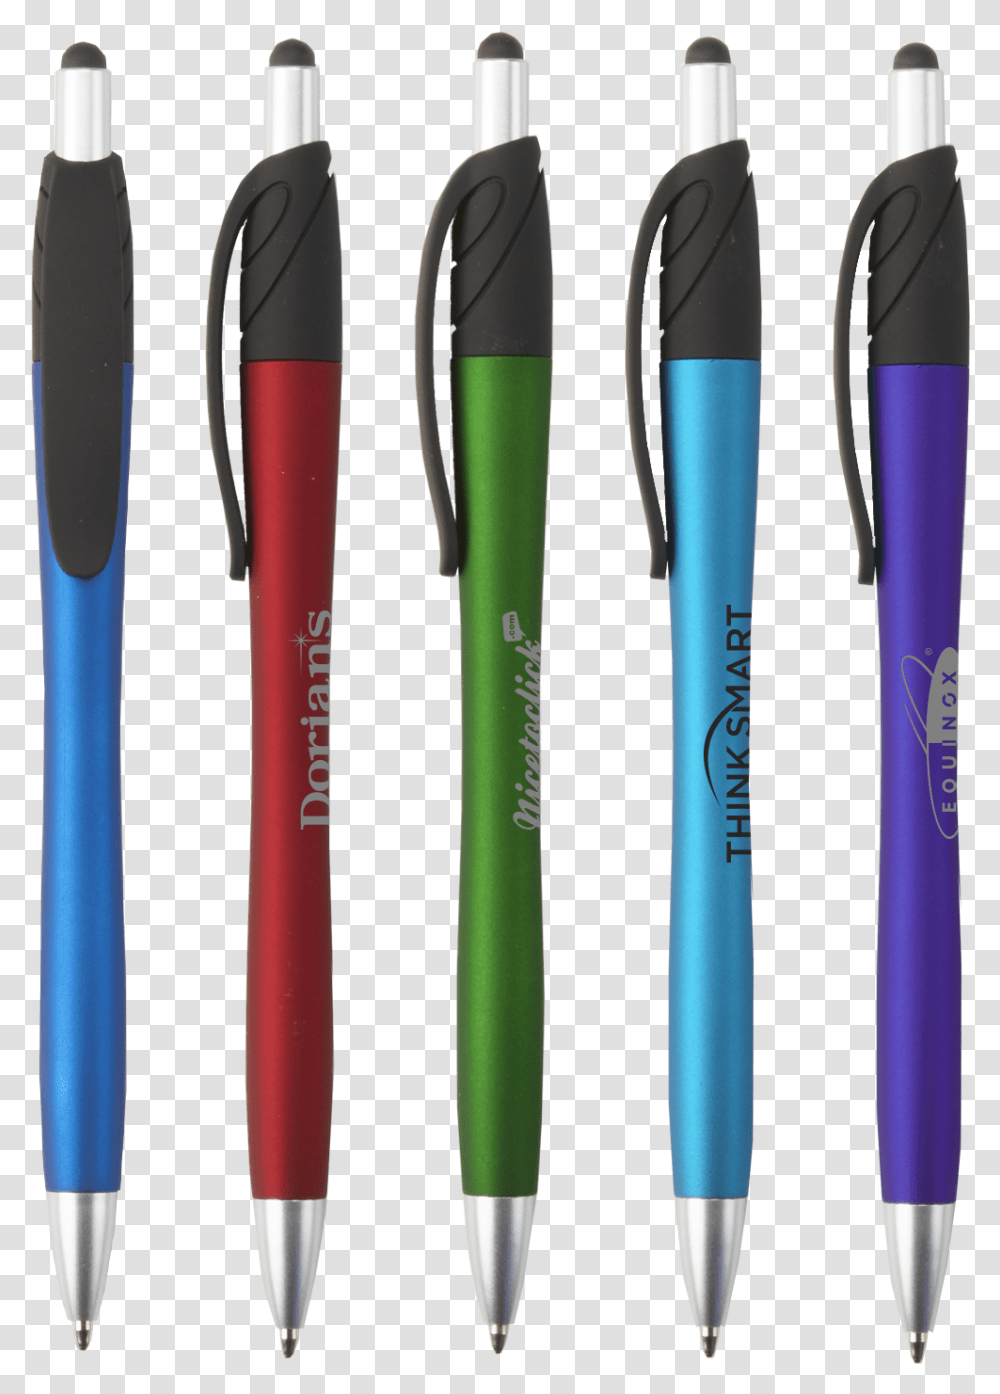 La Mirada Velvet Touch Vgc Stylus Pen, Brush, Tool, Cutlery, Baseball Bat Transparent Png